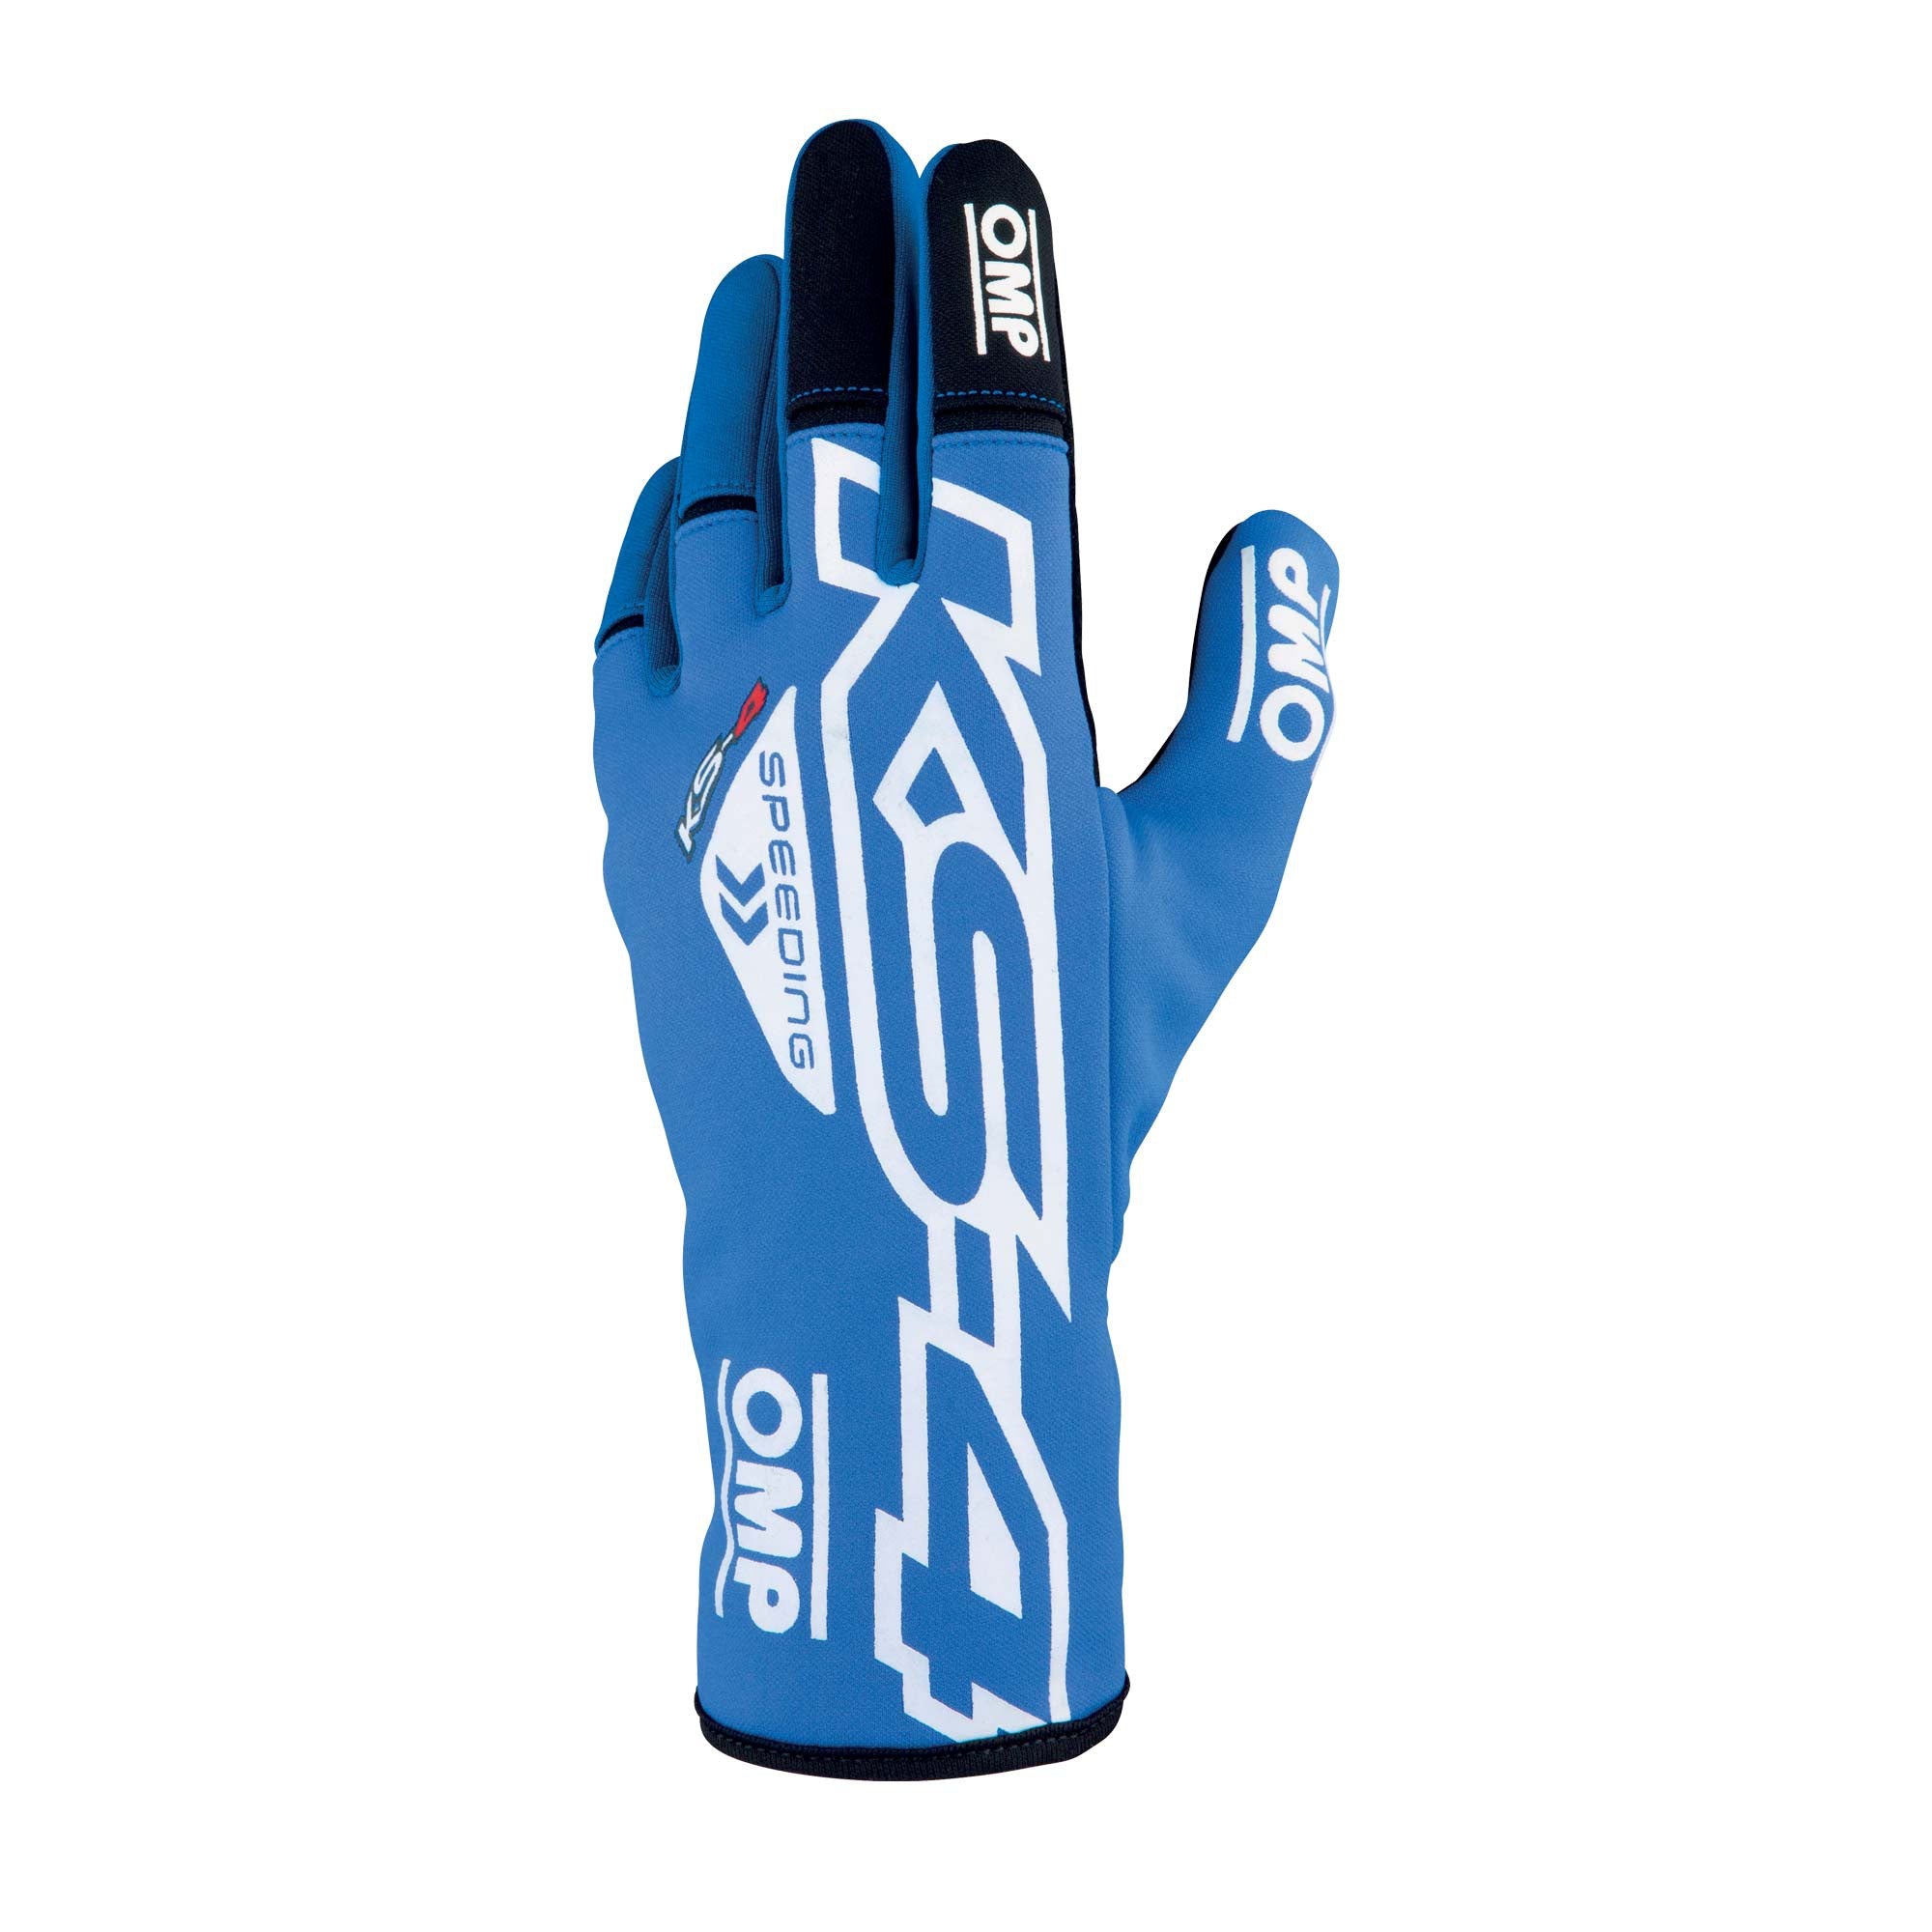 OMP KB0-2750-A01-043-XS KS-4 Gloves my2023 Karting gloves, blue/white, size XS Photo-0 